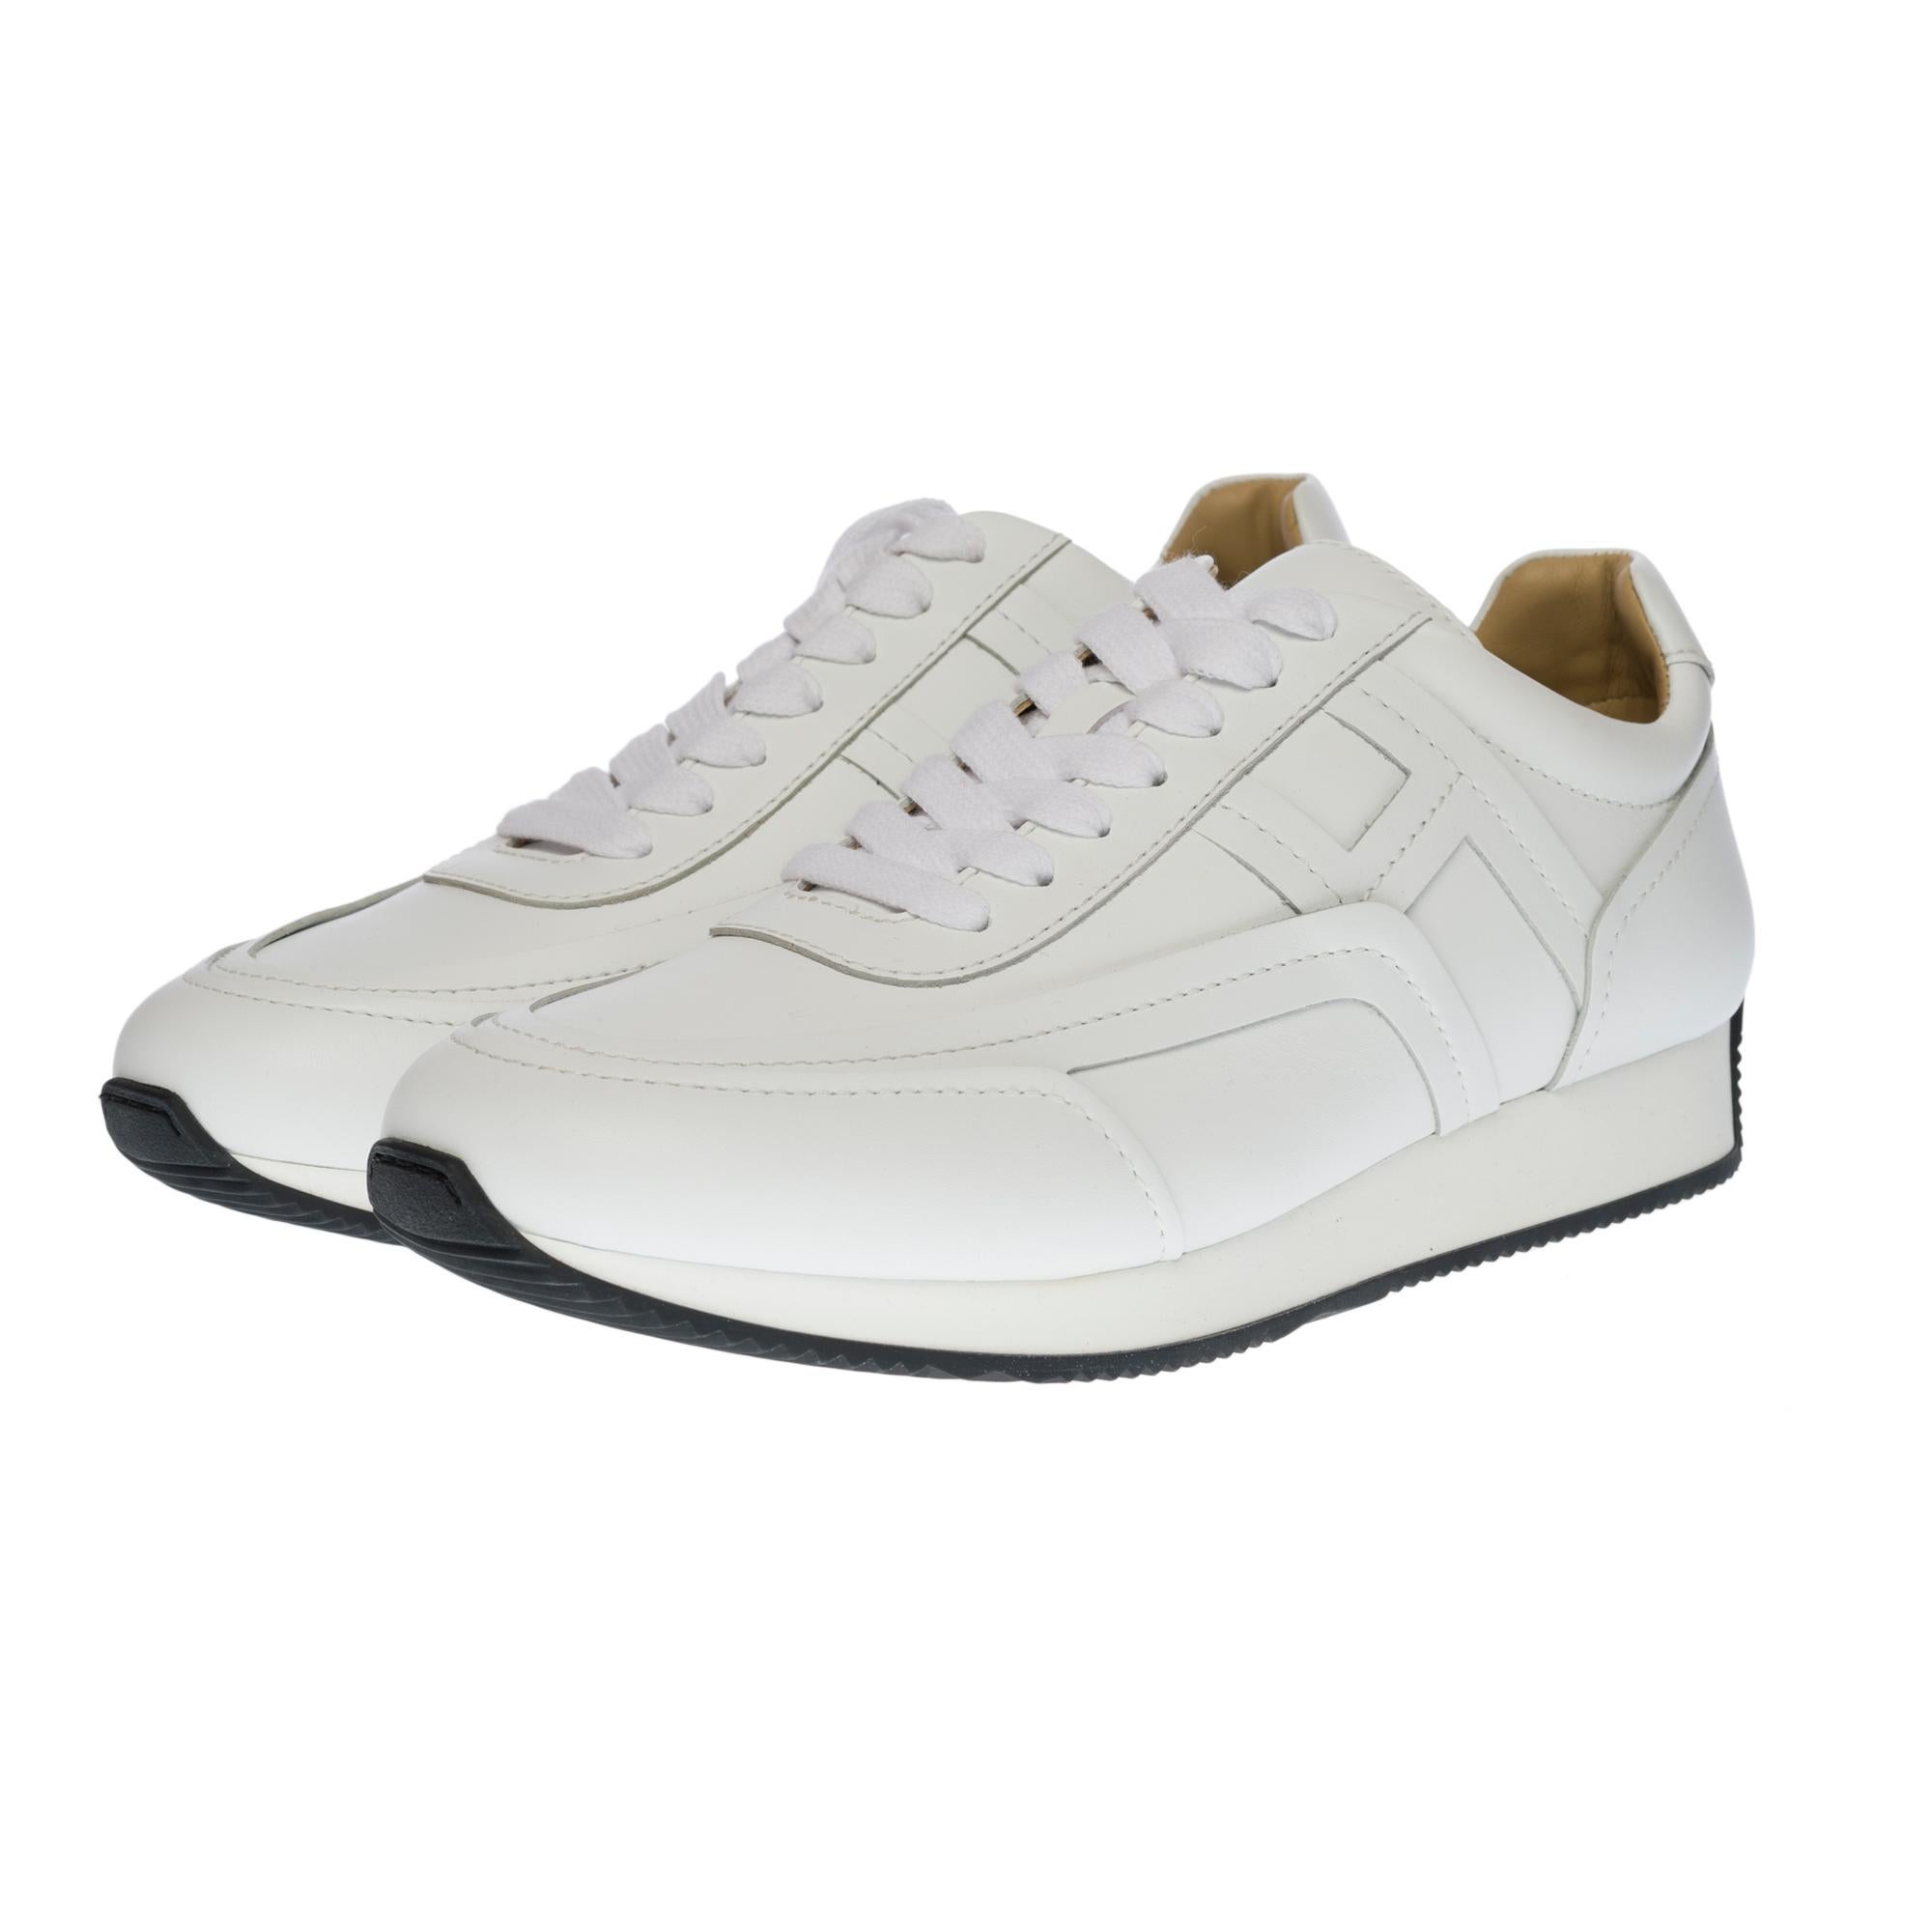 New - Hermès Chris Men's Sneakers in white calf - Size 43.5 2